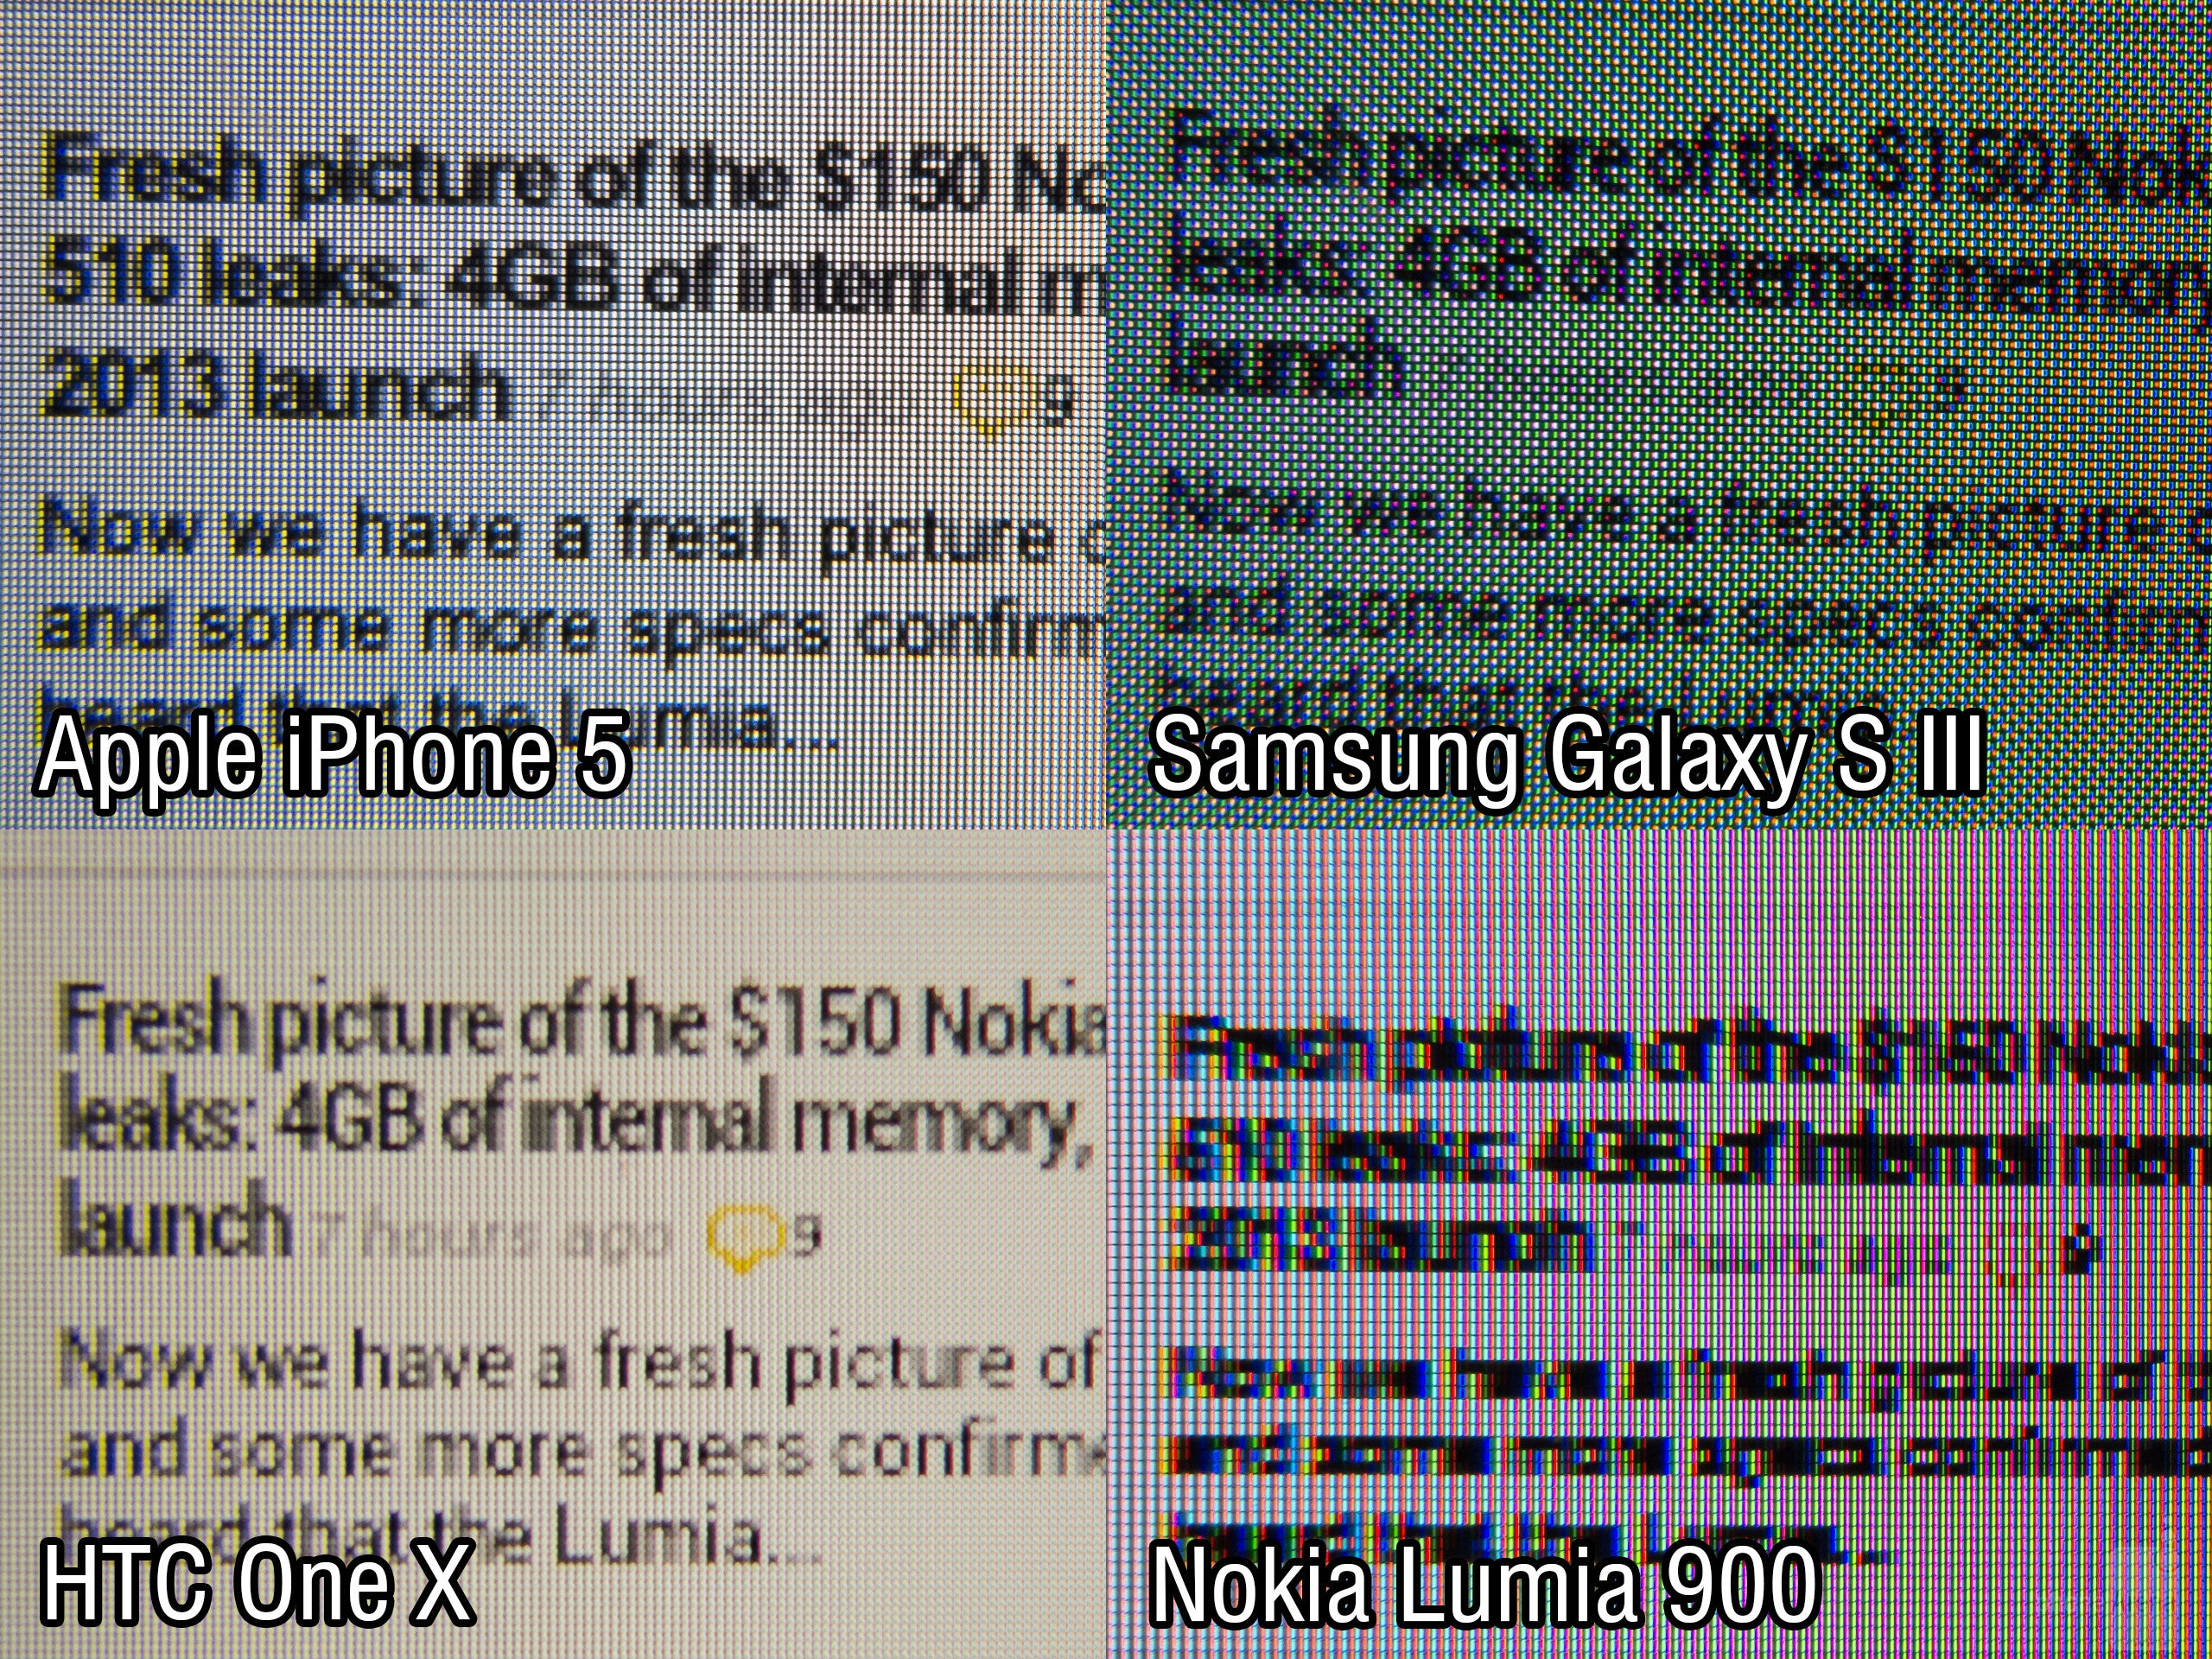 Display Comparison: Apple iPhone 5 vs Samsung Galaxy S III vs HTC One X vs Nokia Lumia 900